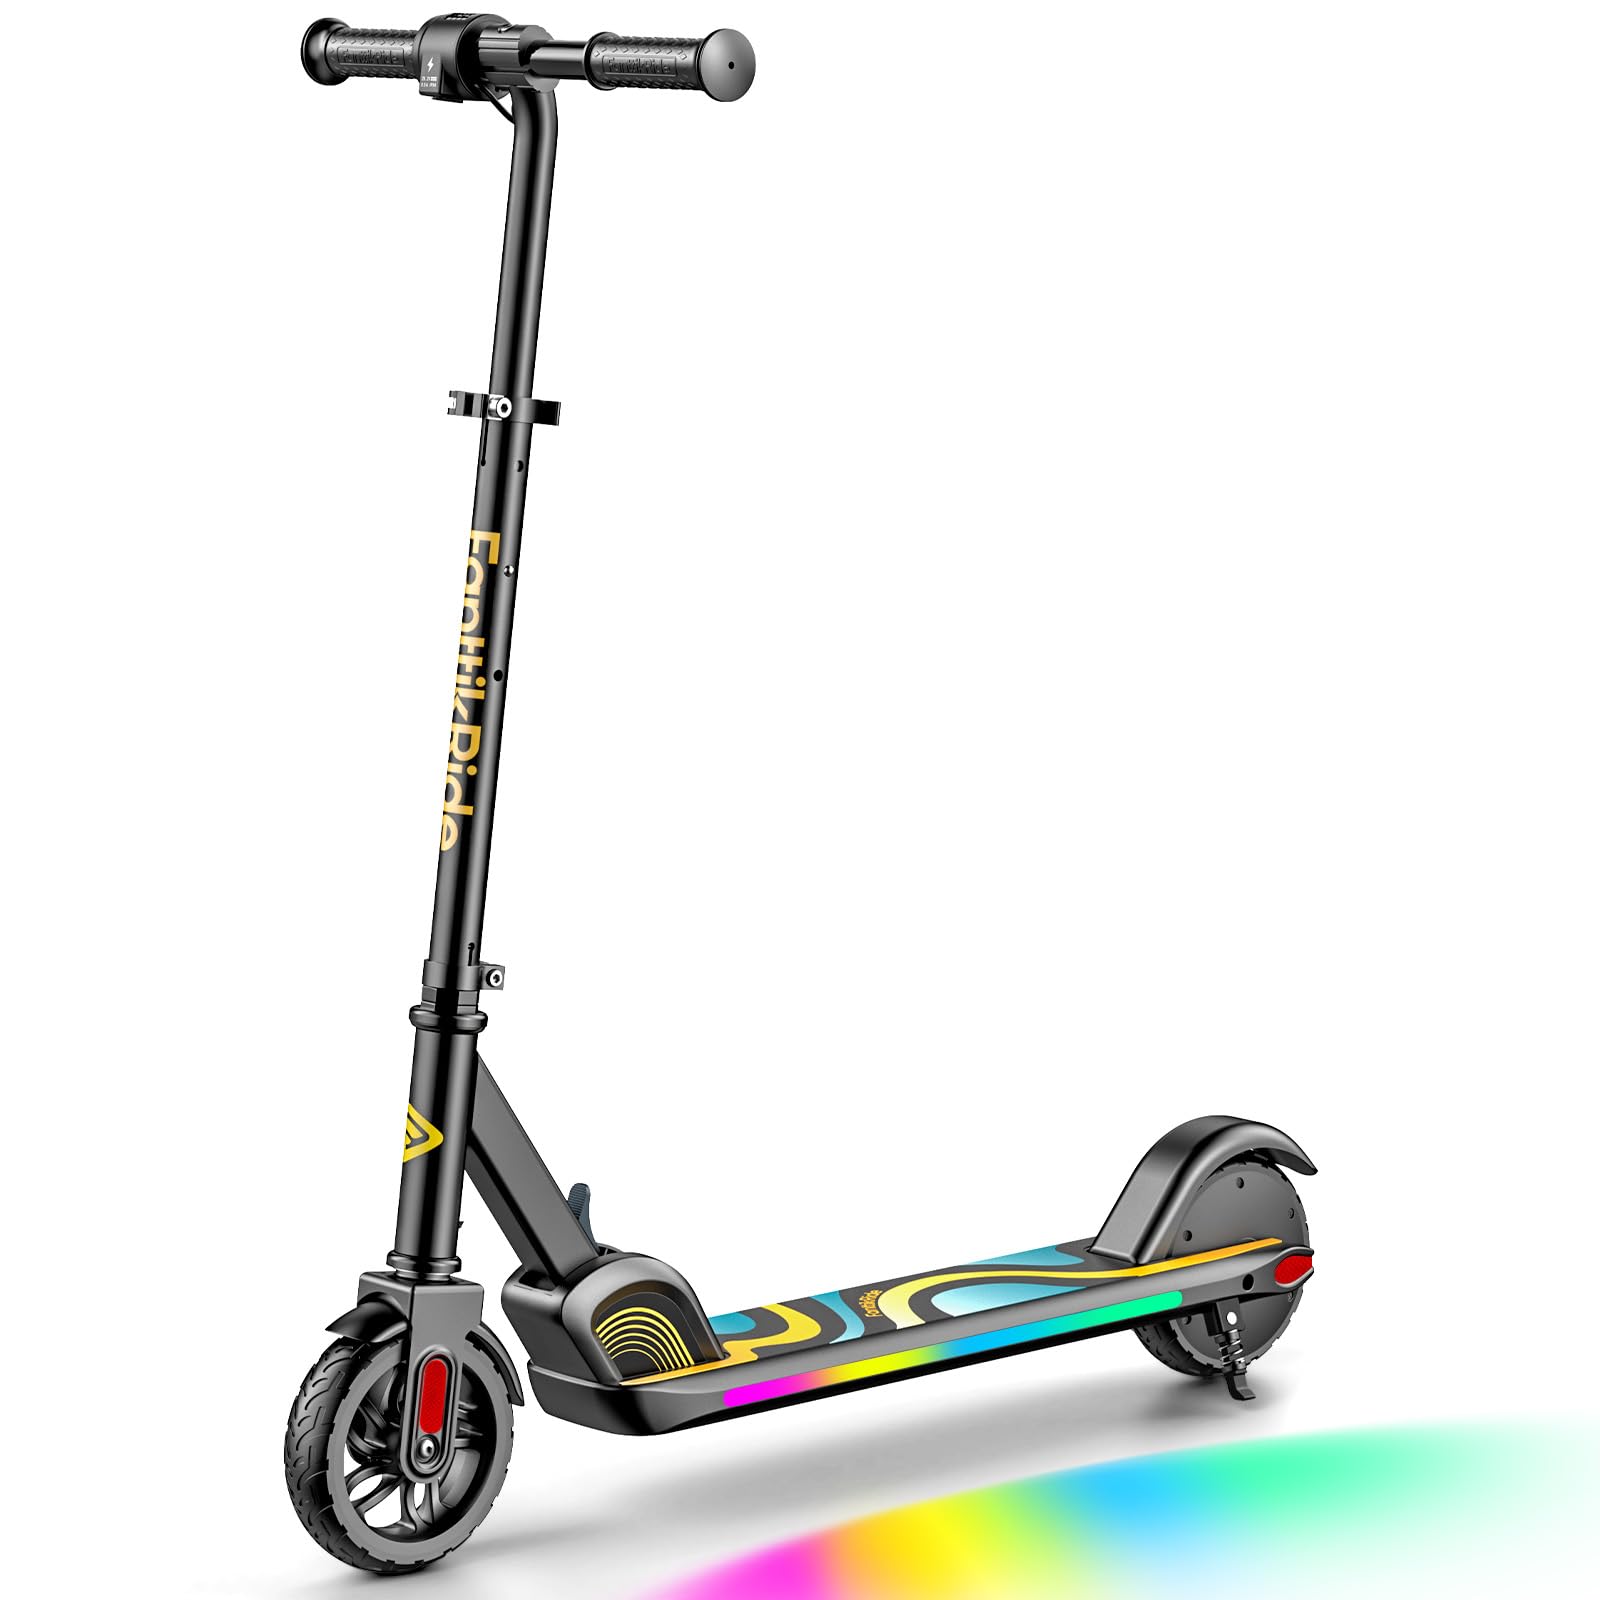 FanttikRide Electric Scooter